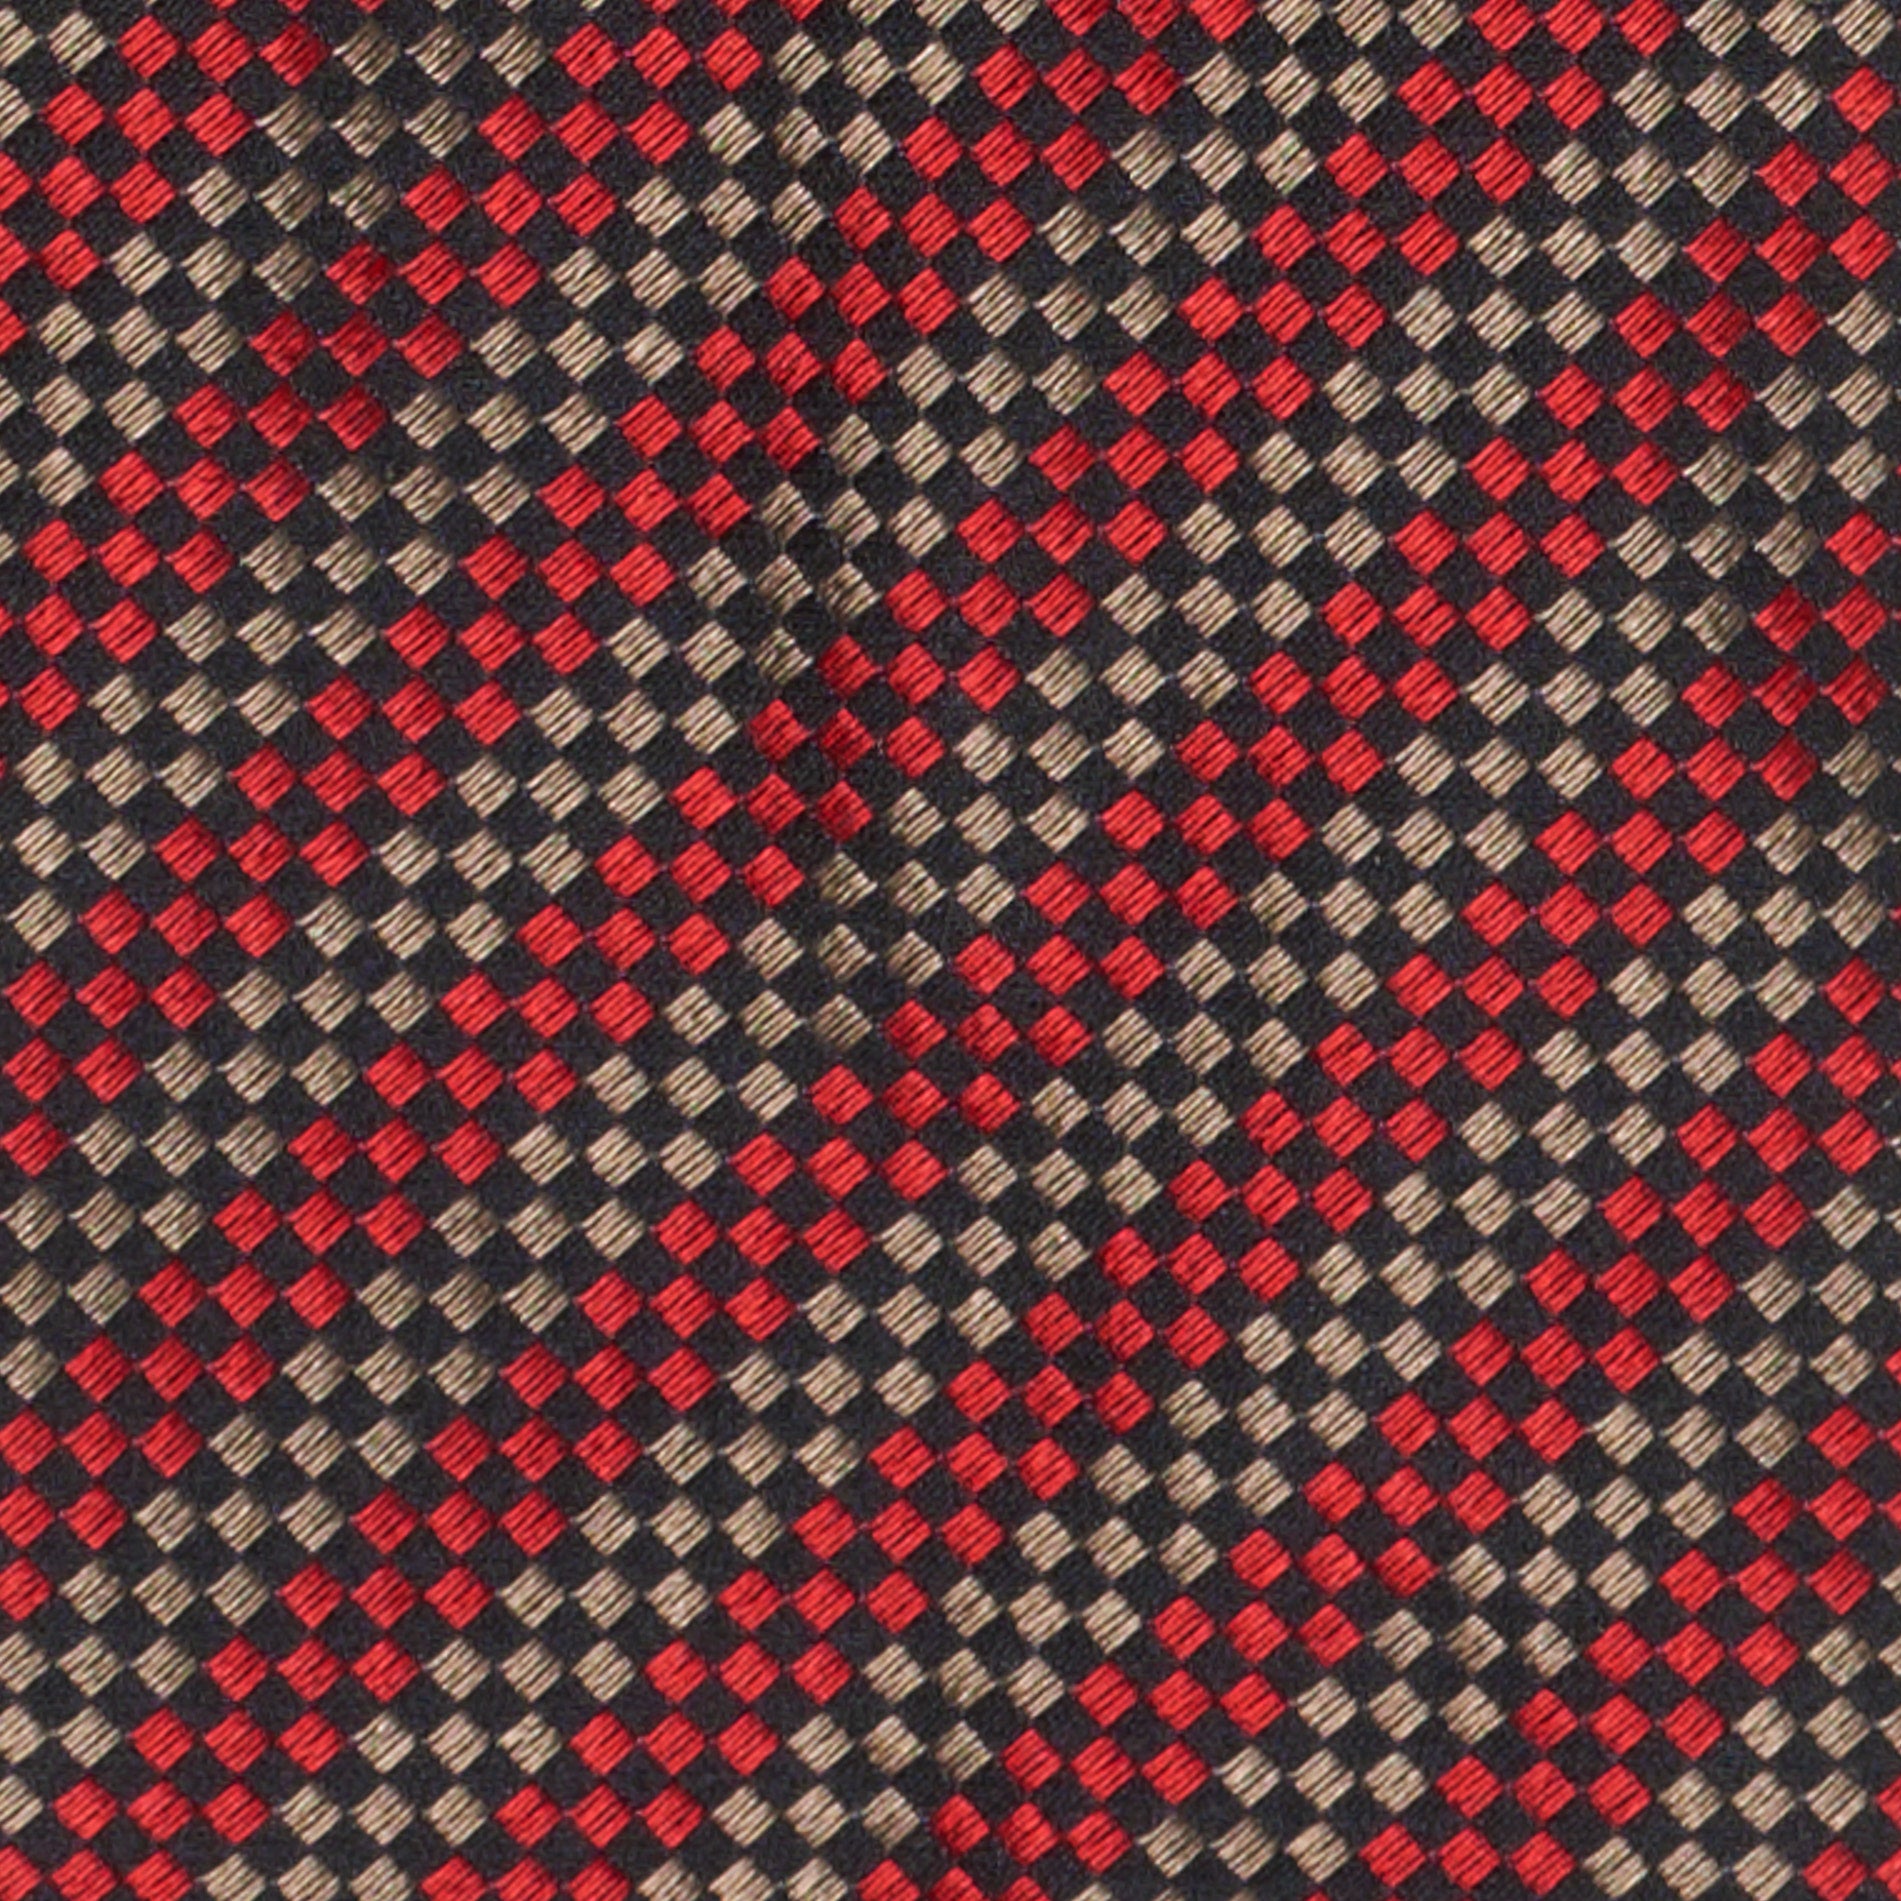 BOTTEGA VENETA Handmade Red Striped Design Silk Tie